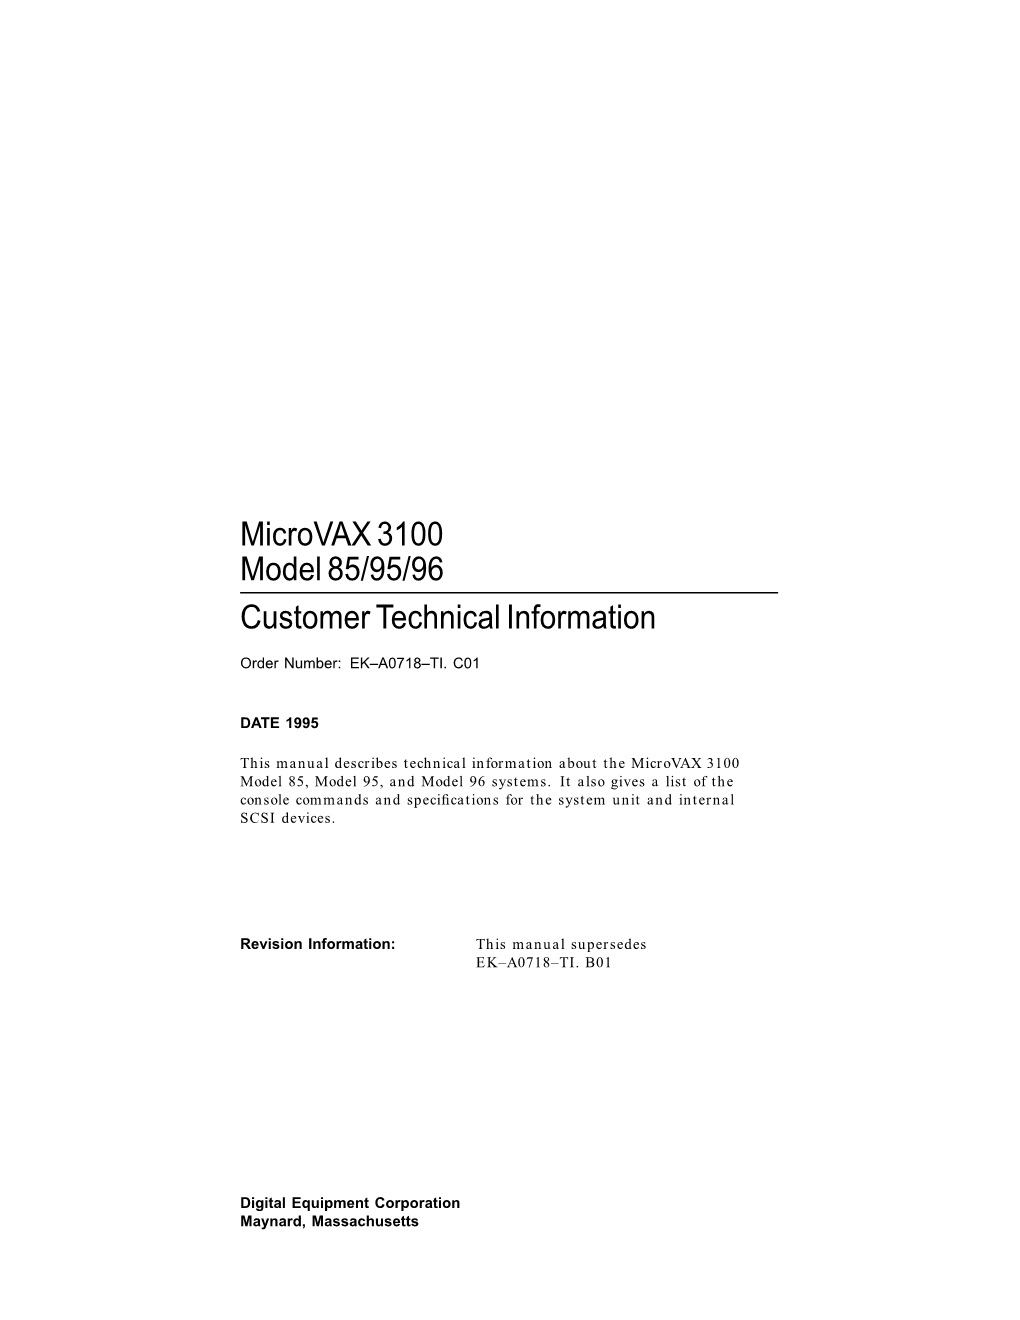 Microvax 3100 Model 85/95/96 Customer Technical Information